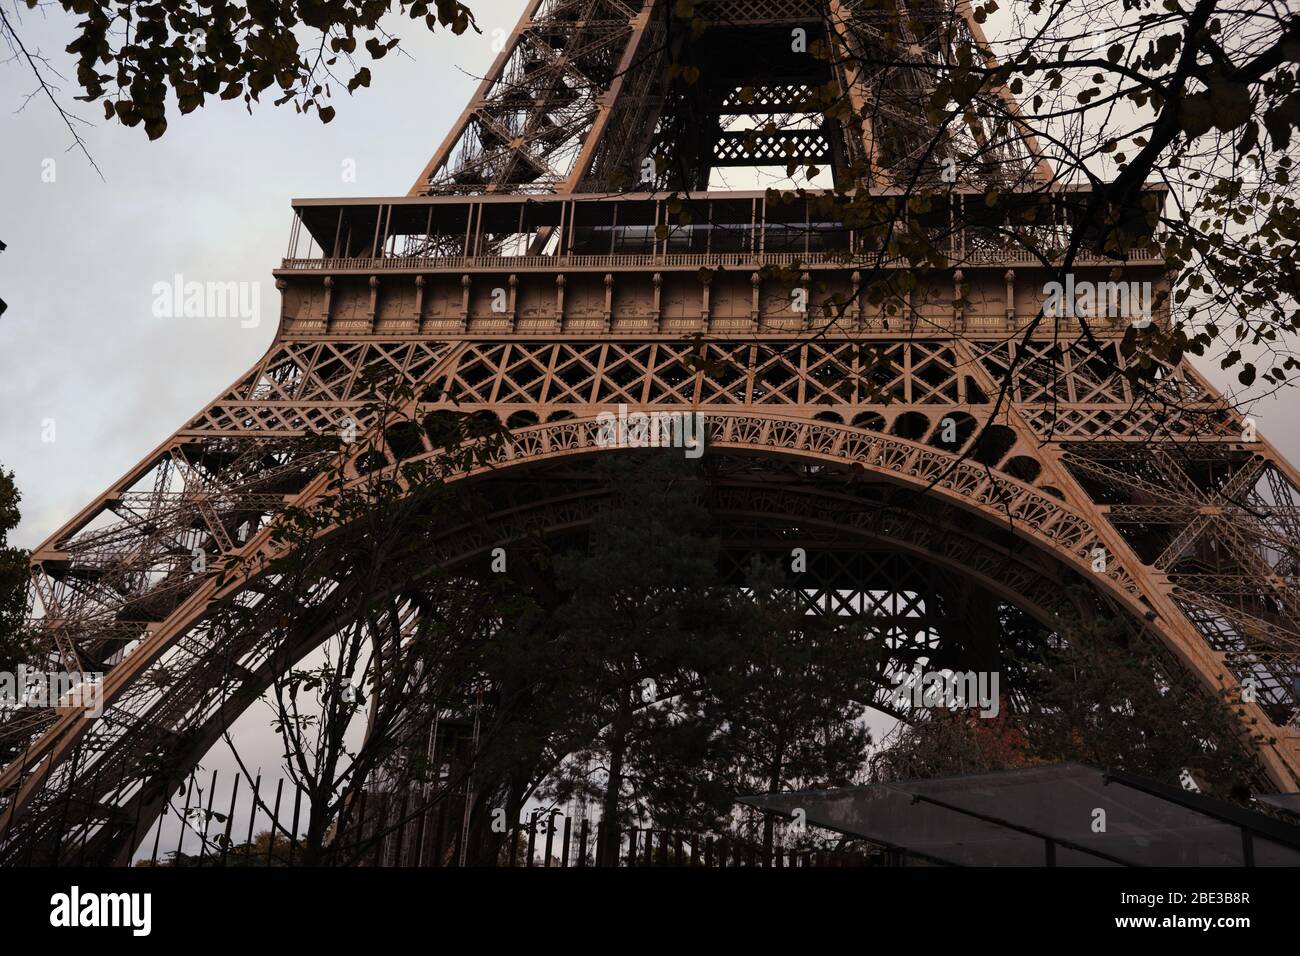 Eiffel Tower Names under Viewing Platform Stock Photo